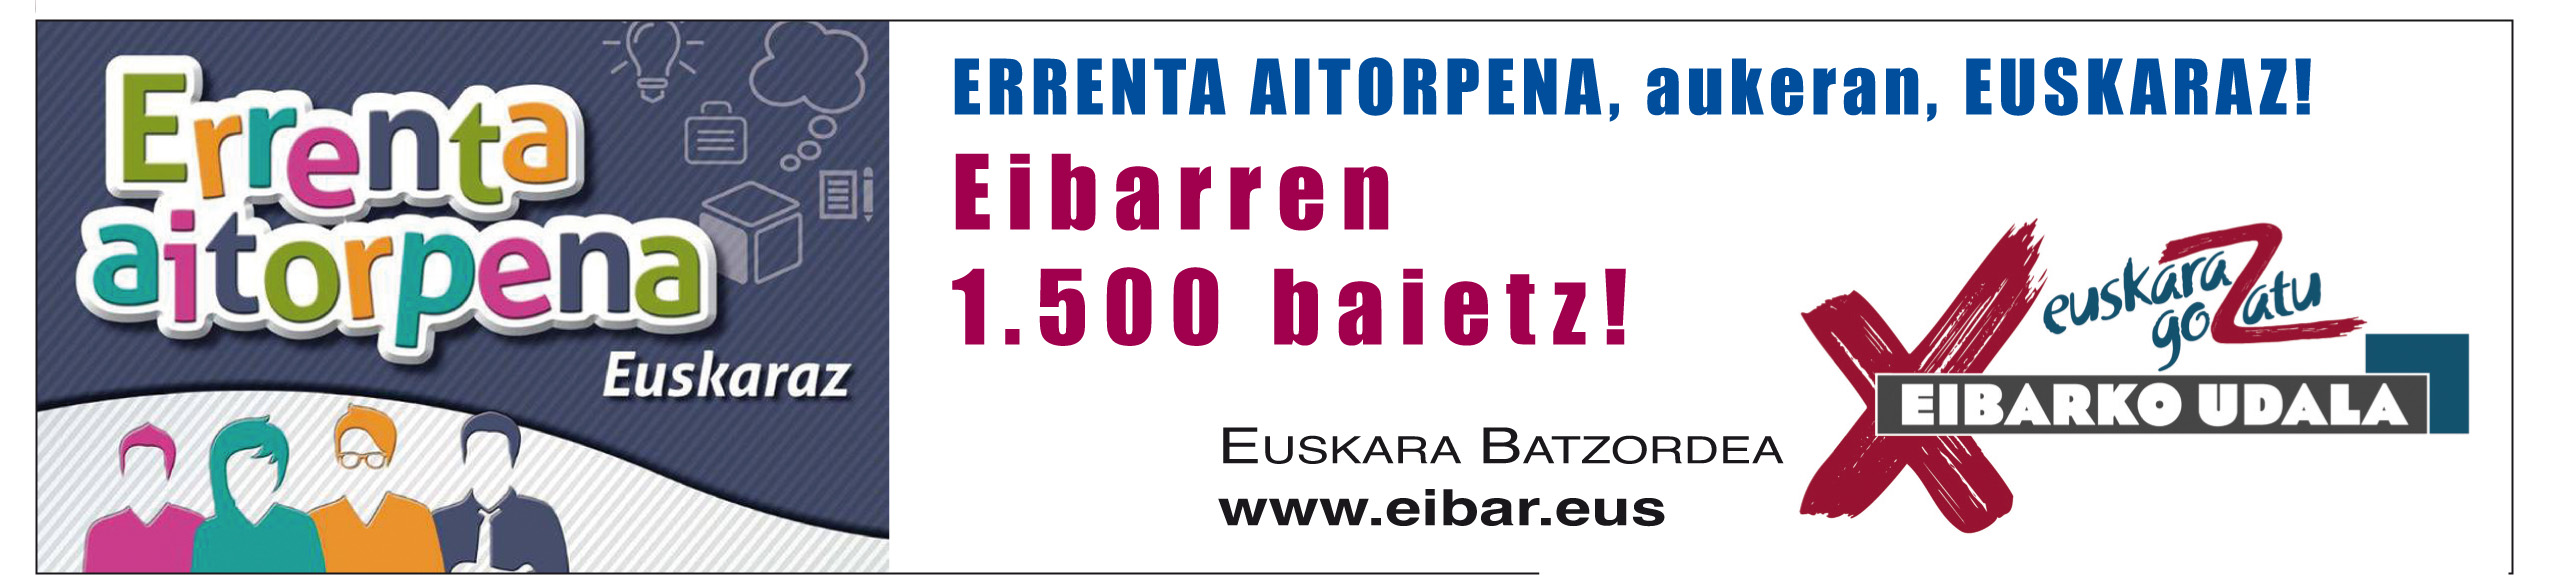 El Ayuntamiento de Eibar pone en marcha la campaña "Errenta aitorpena, aukeran, euskaraz. Eibarren 1.500 baietz! "